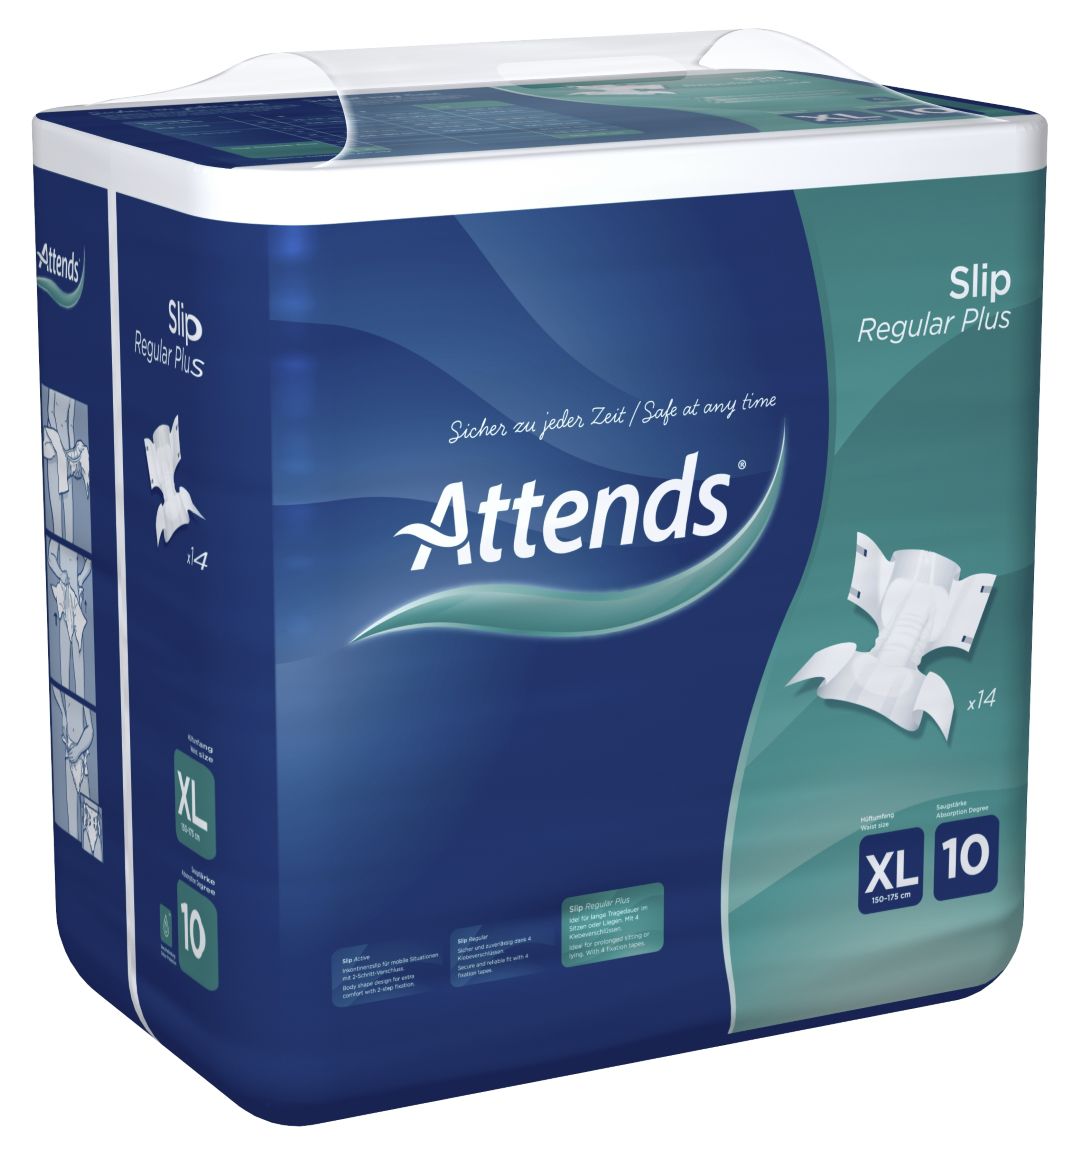 ATTENDS Slip Regular Plus 10 XL